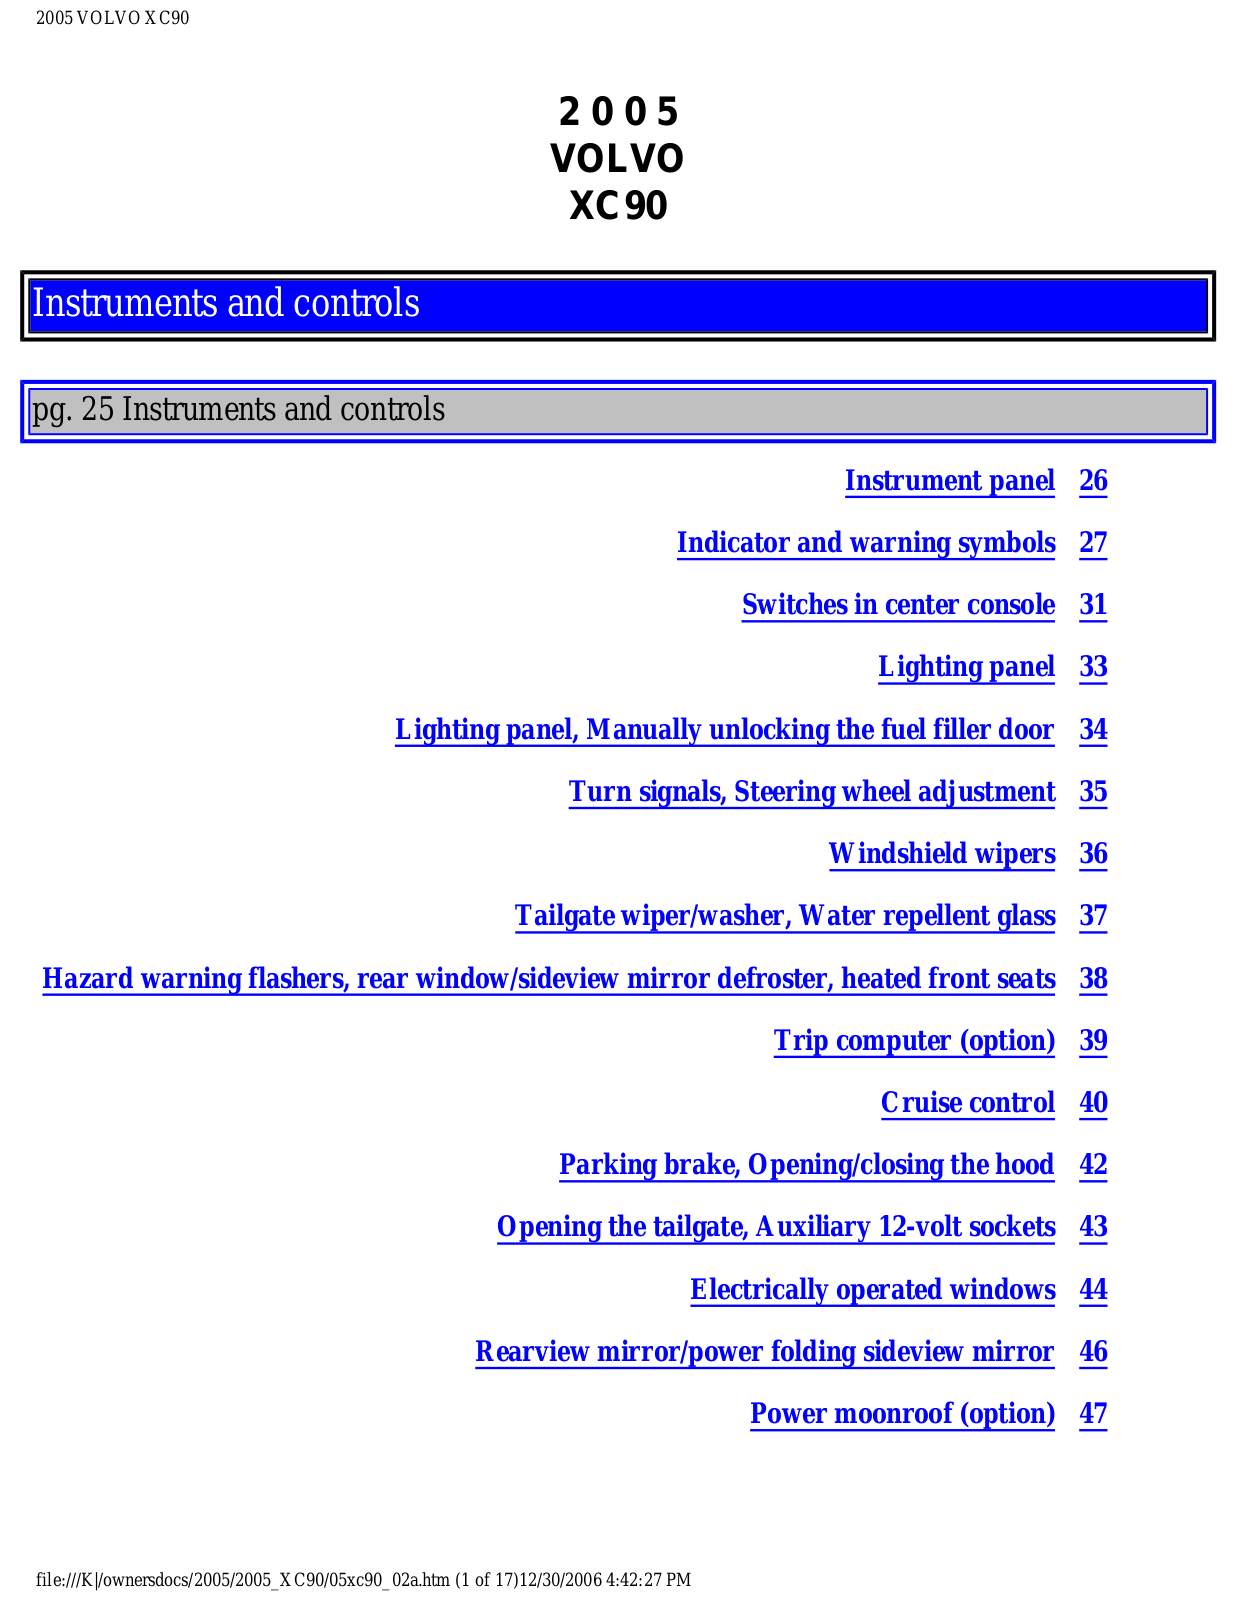 Volvo XC90, XC90 2005 User Manual